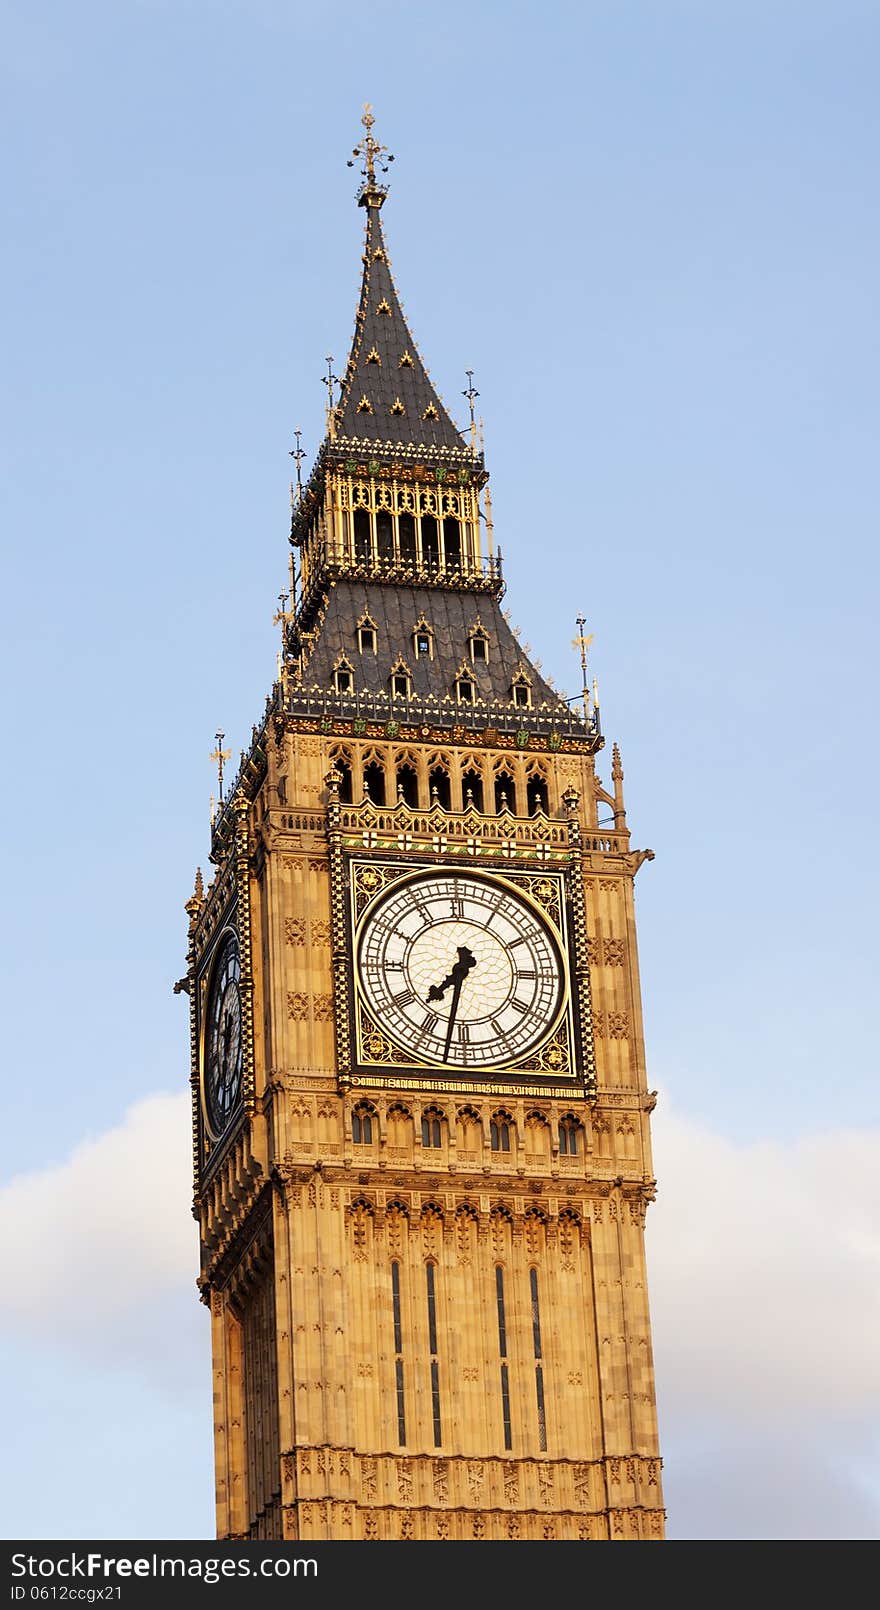 Clock face of Big Ben, Westminster